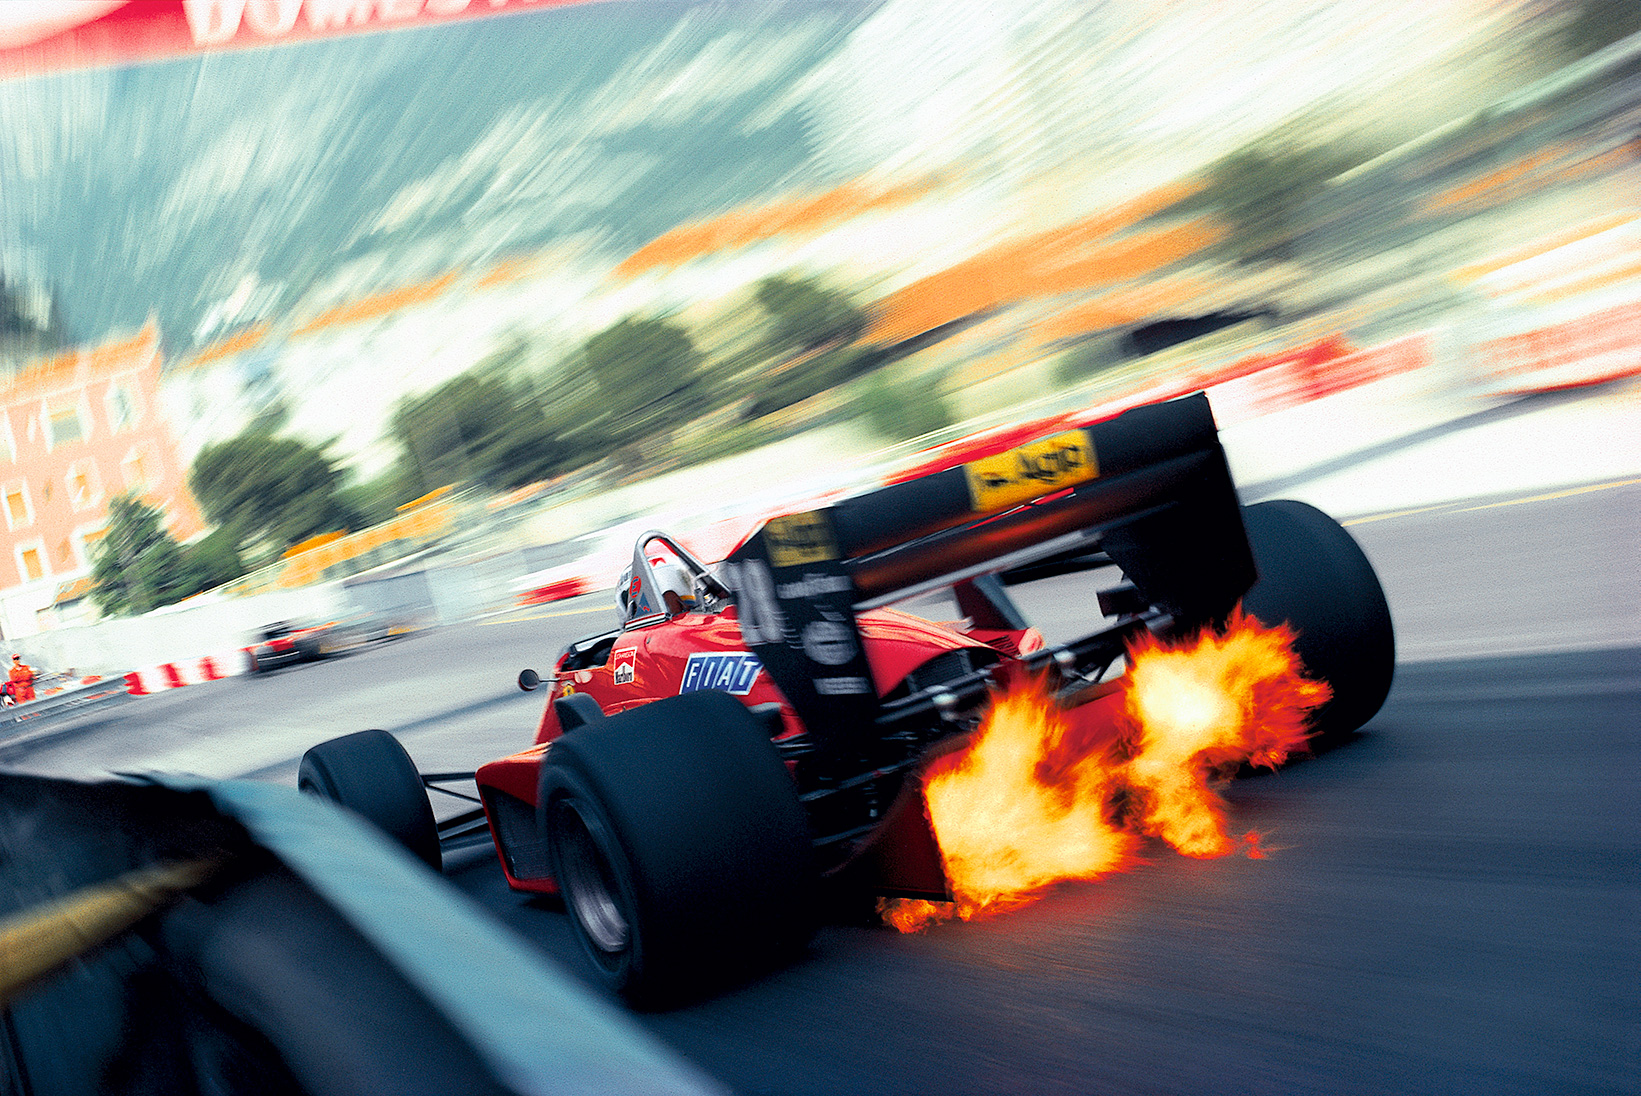 "Schlegelmilch’s most iconic Ferrari image, summing up his 'freezing speed' technique. Stefan Johansson in Monaco 1985."